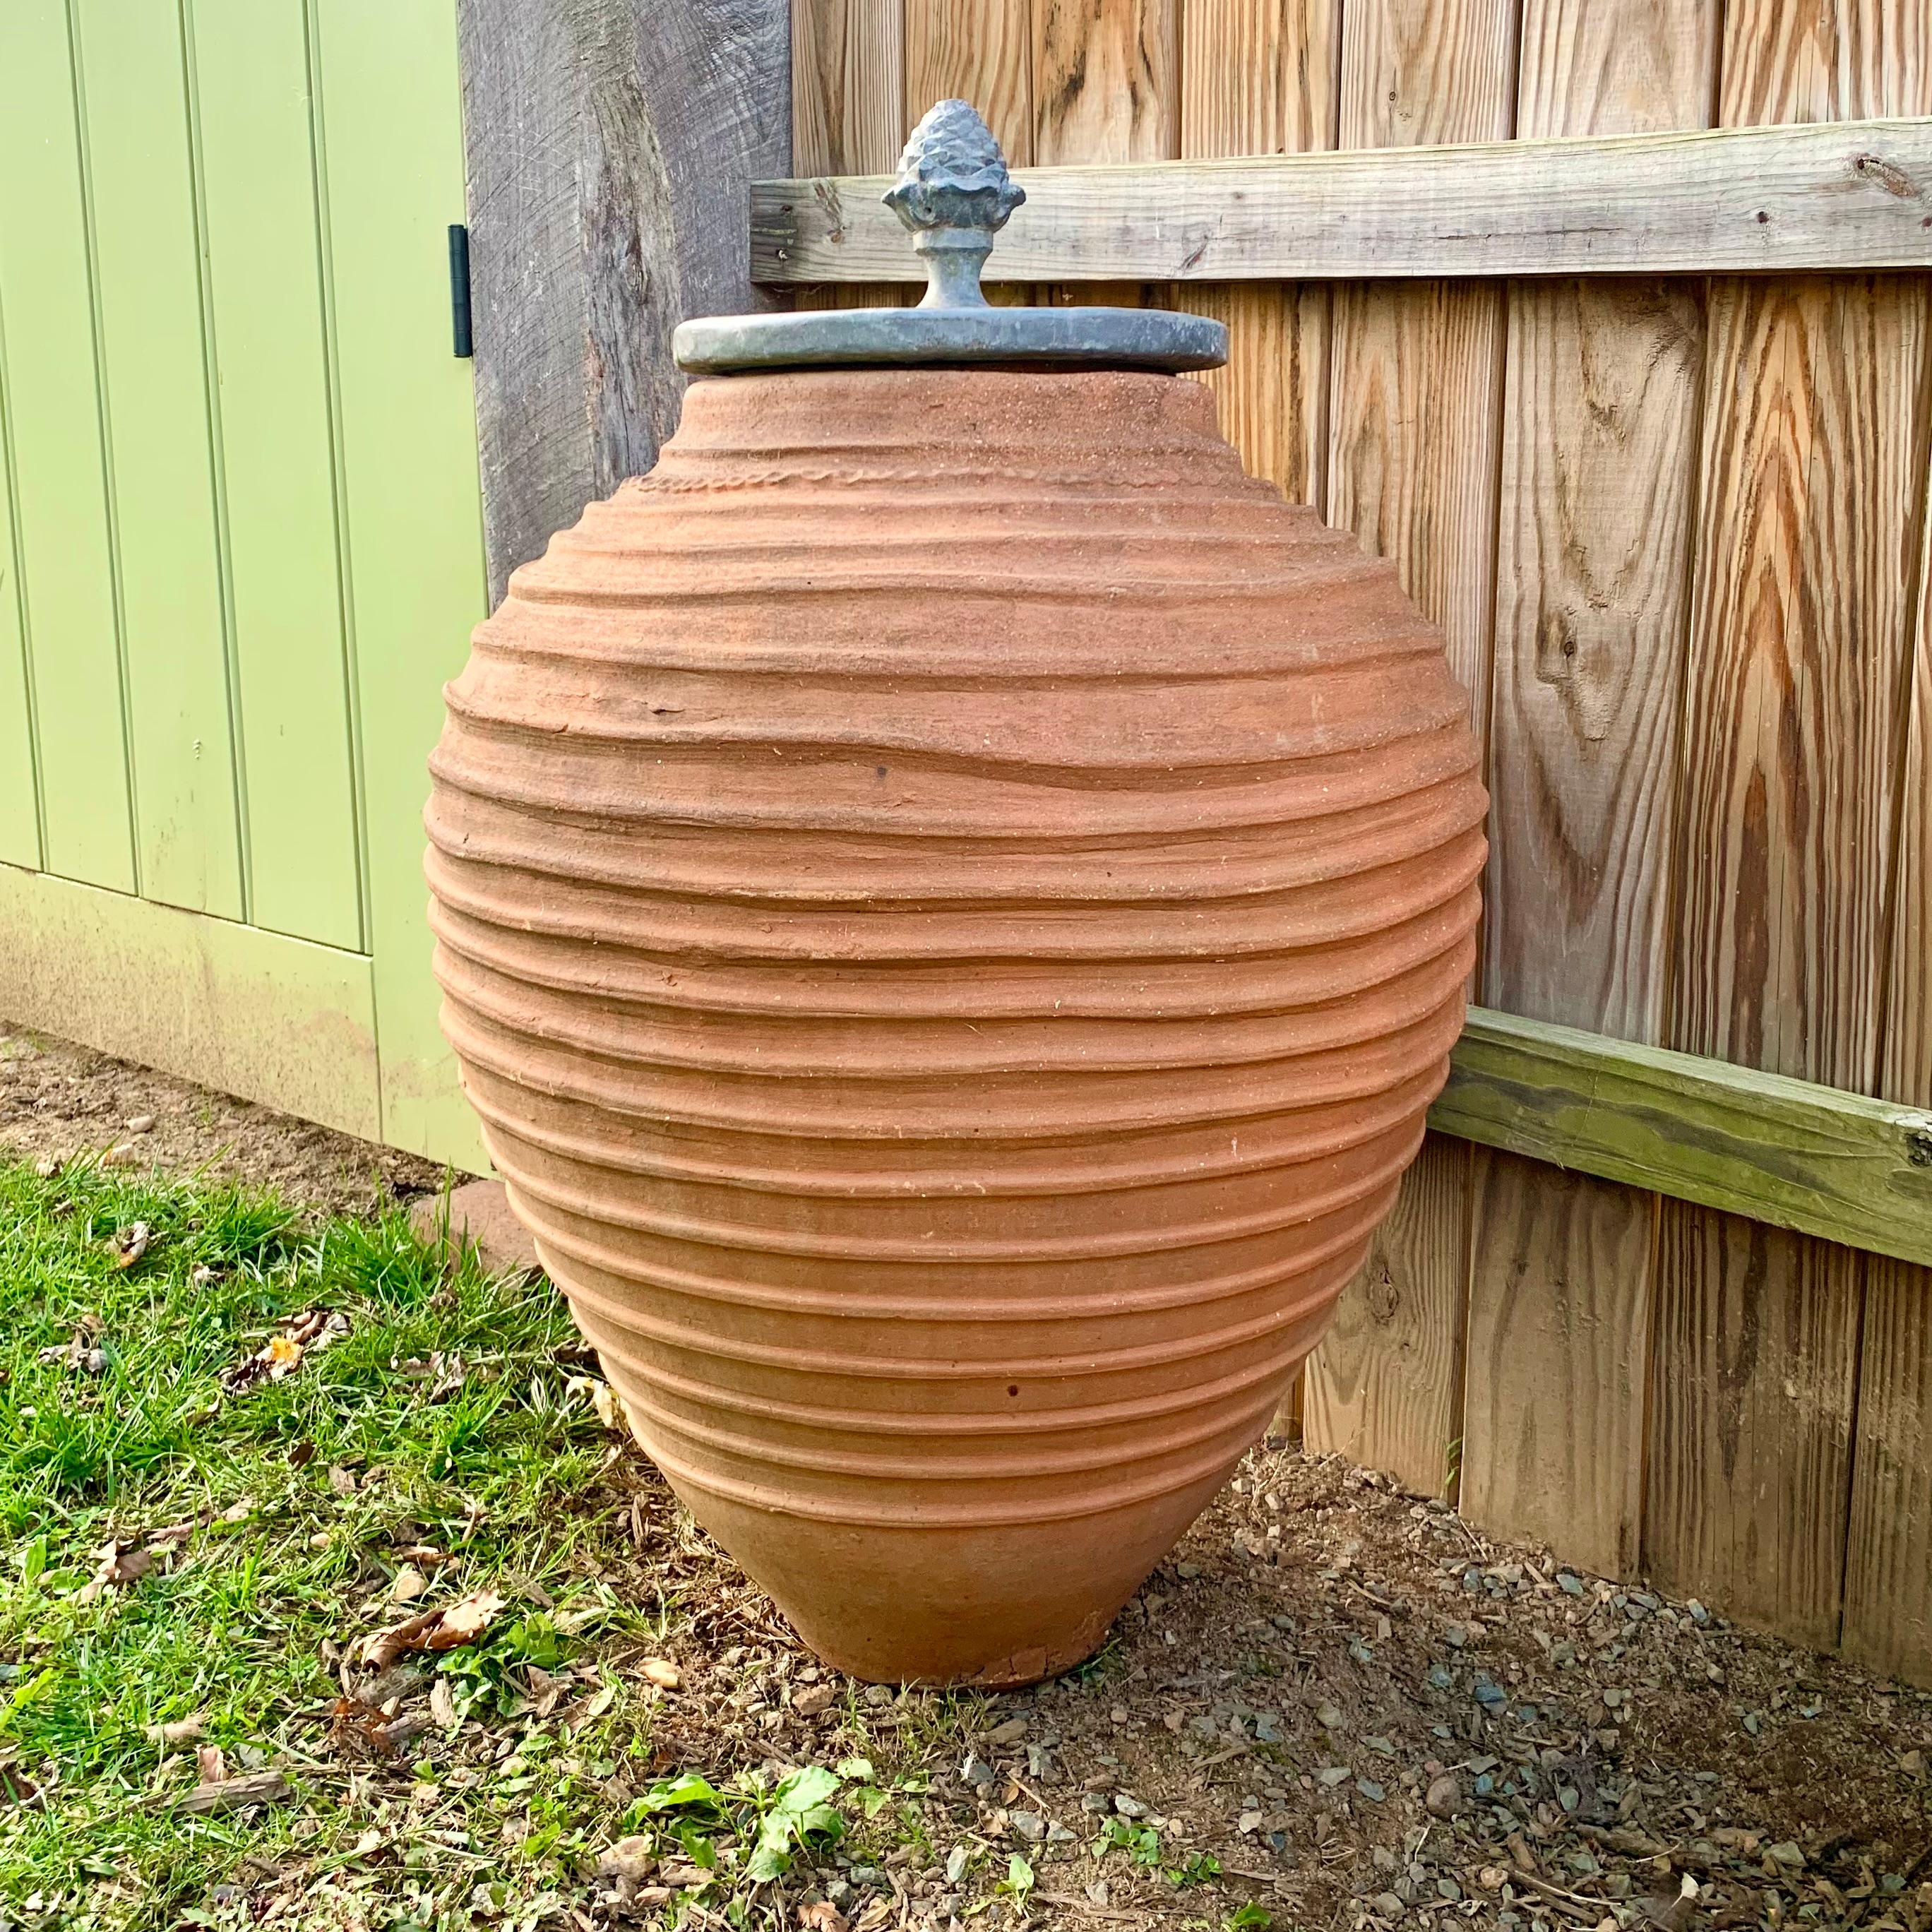 20th Century Terracotta Jar Garden Urn With An Ornamental Lead Lid For Sale